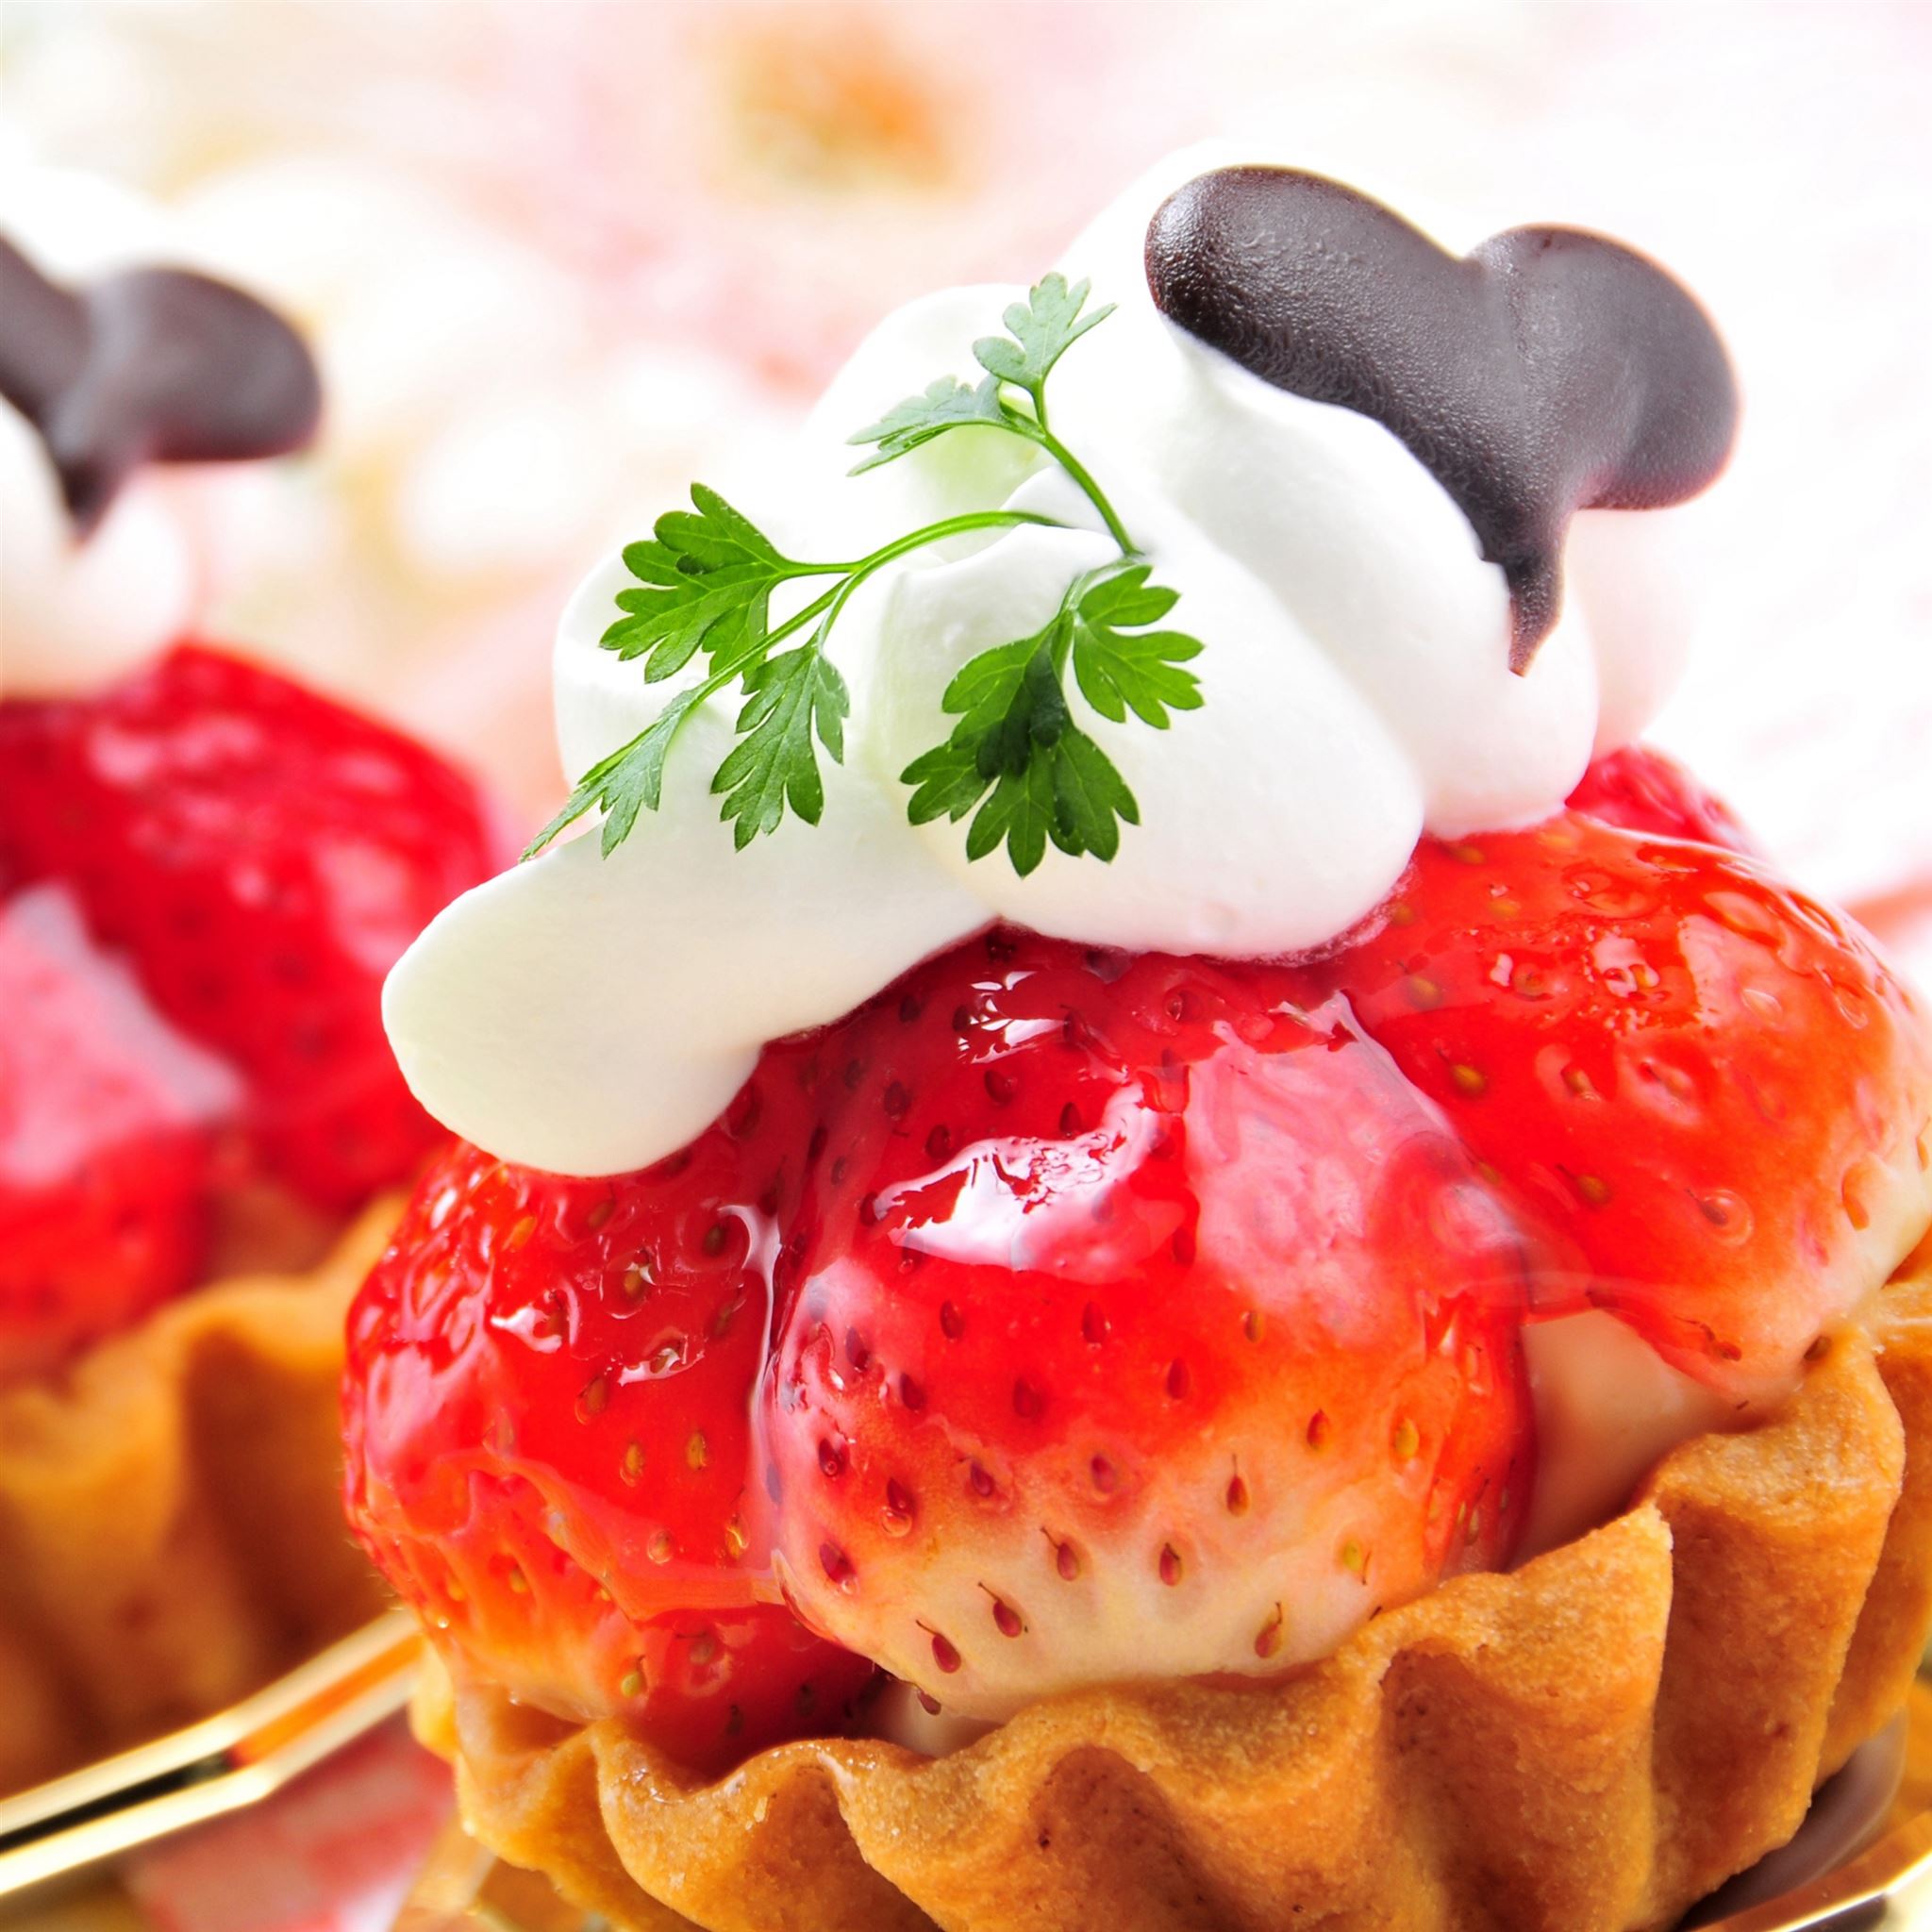 Strawberries Cake Jam iPad Pro Wallpaper Free Download